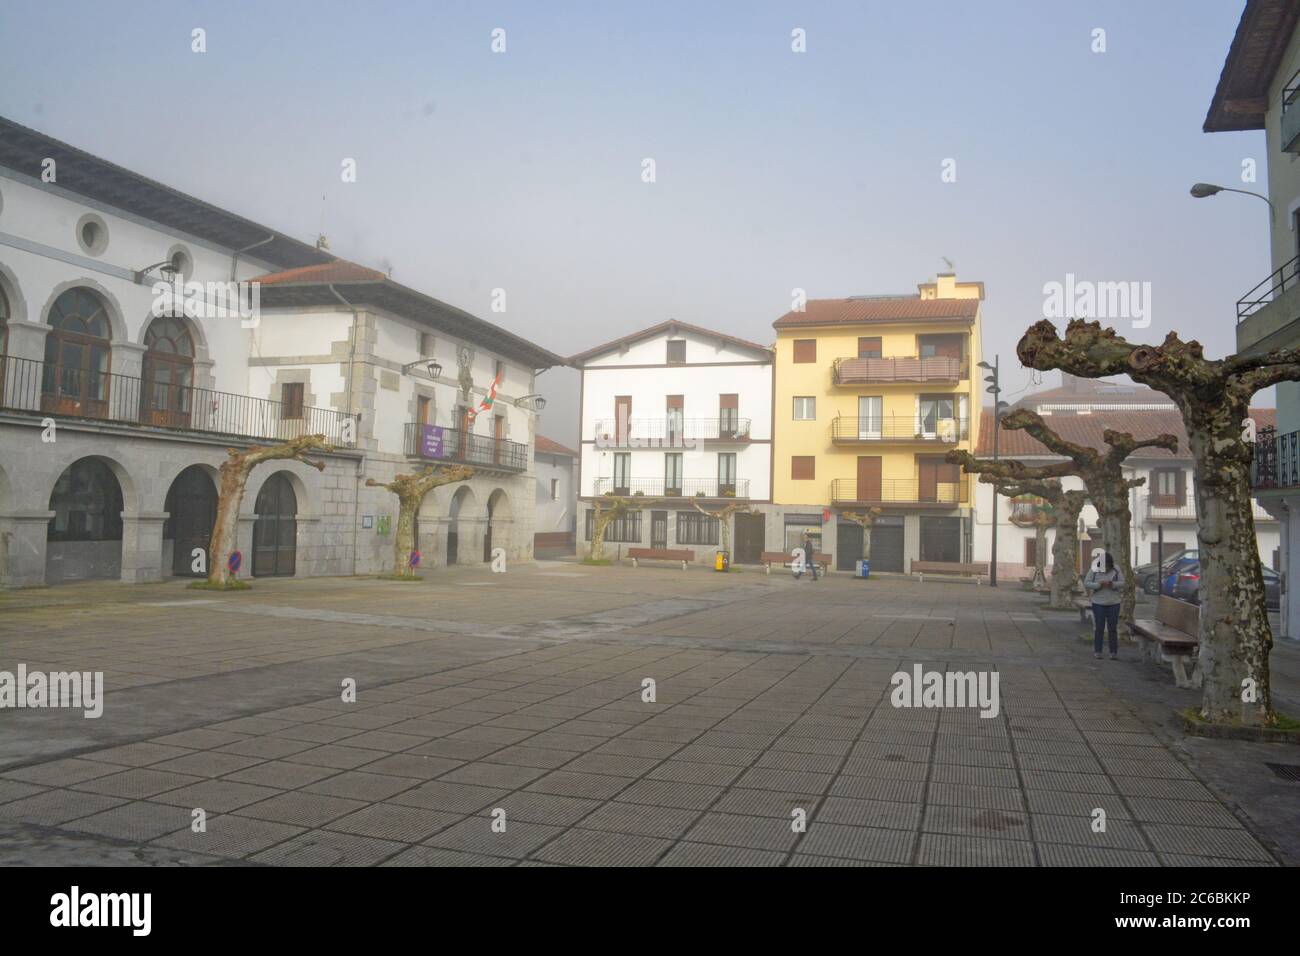 Amezketa Square, in the province of Gipuzkoa, Basque Country, Spain Stock Photo